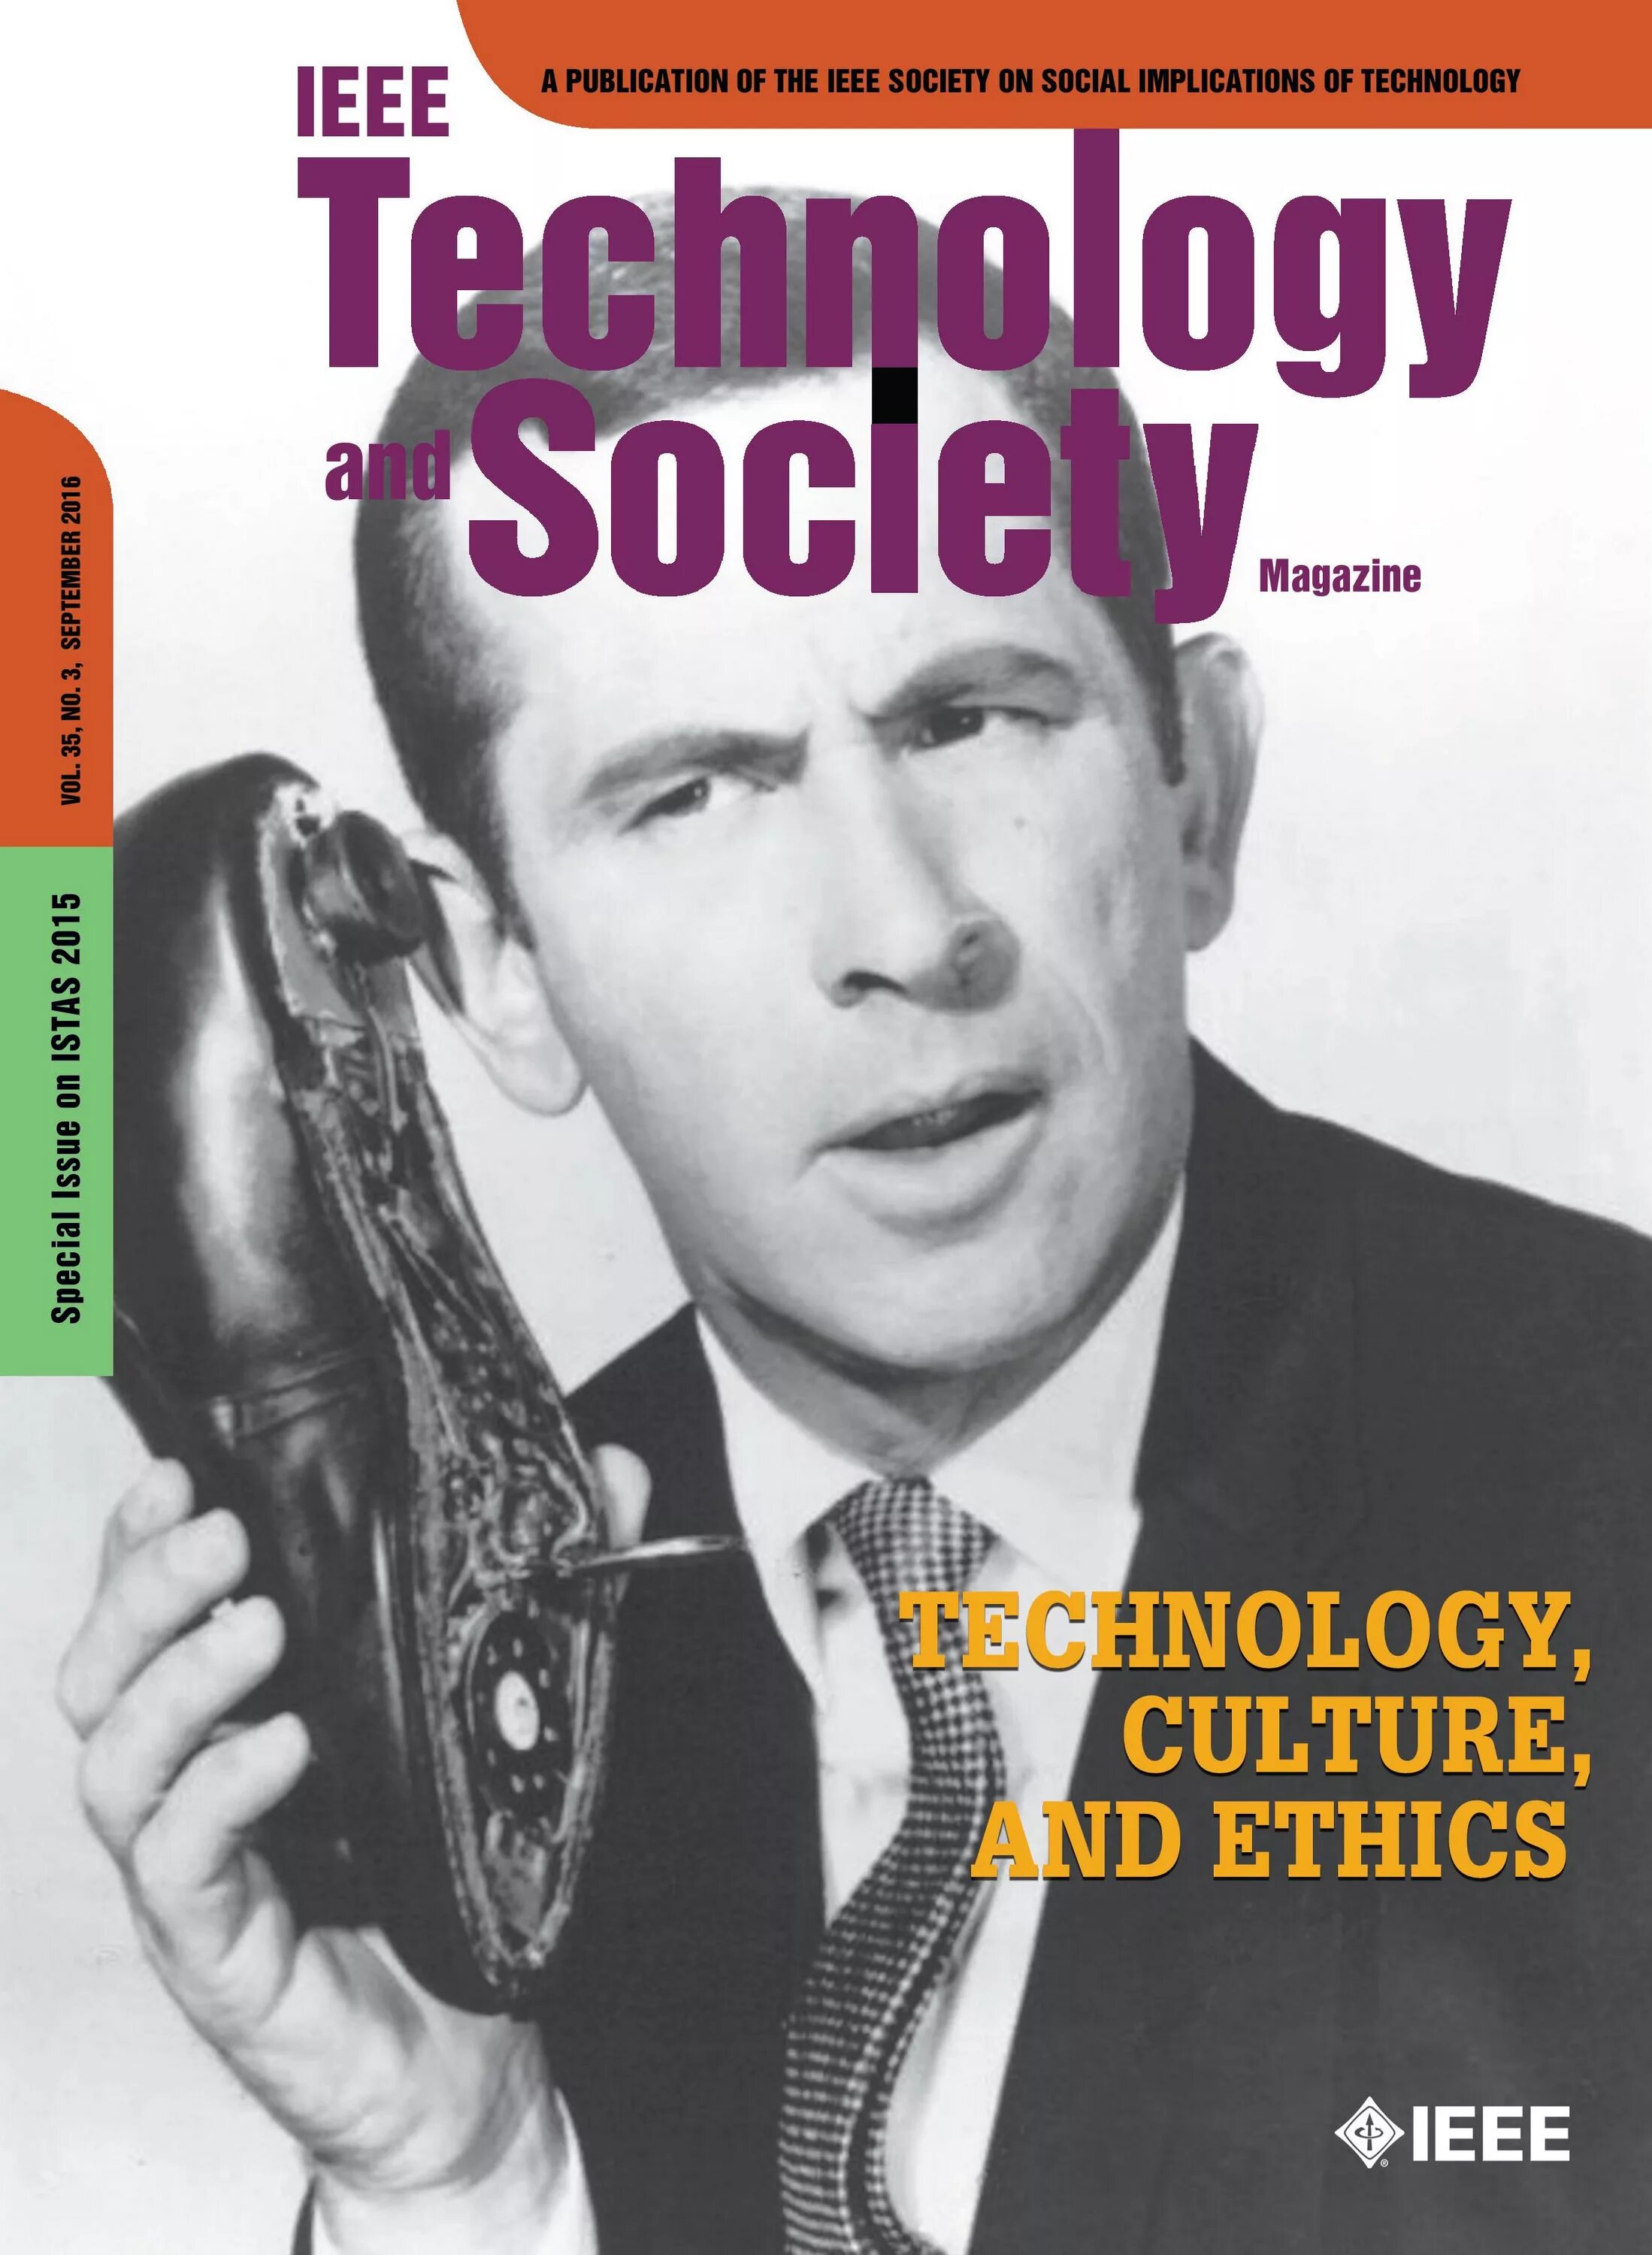 Societies журнал. Technology in Society журнал. Журнал технологии. Cover Magazine Technology. Журнал Технолоджис.